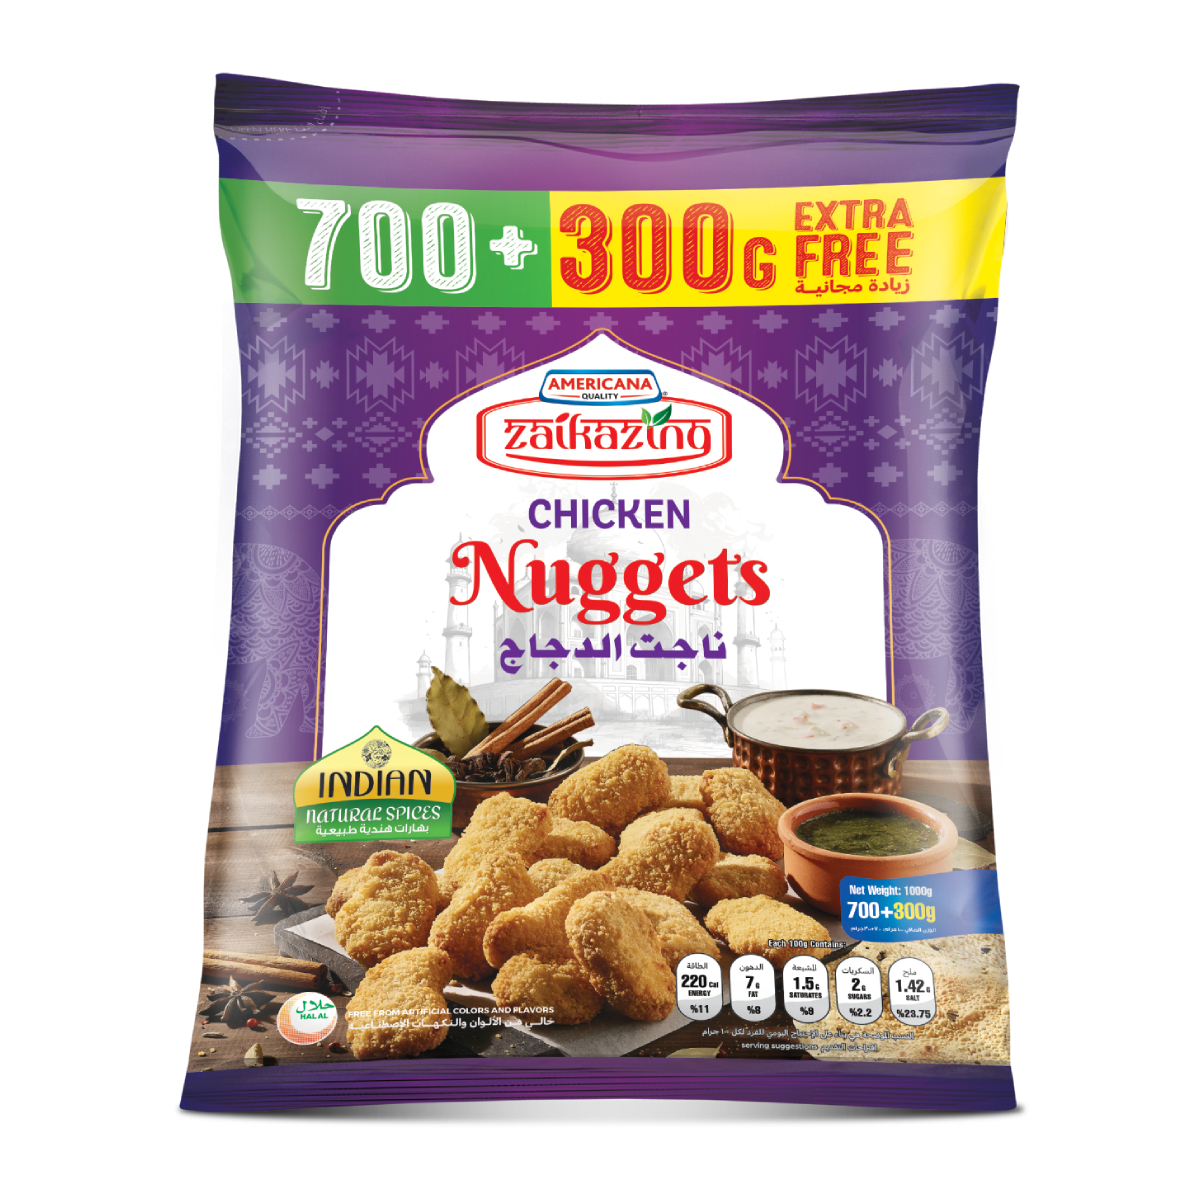 Americana Zaikazing Chicken Nuggets 700 g + 300 g